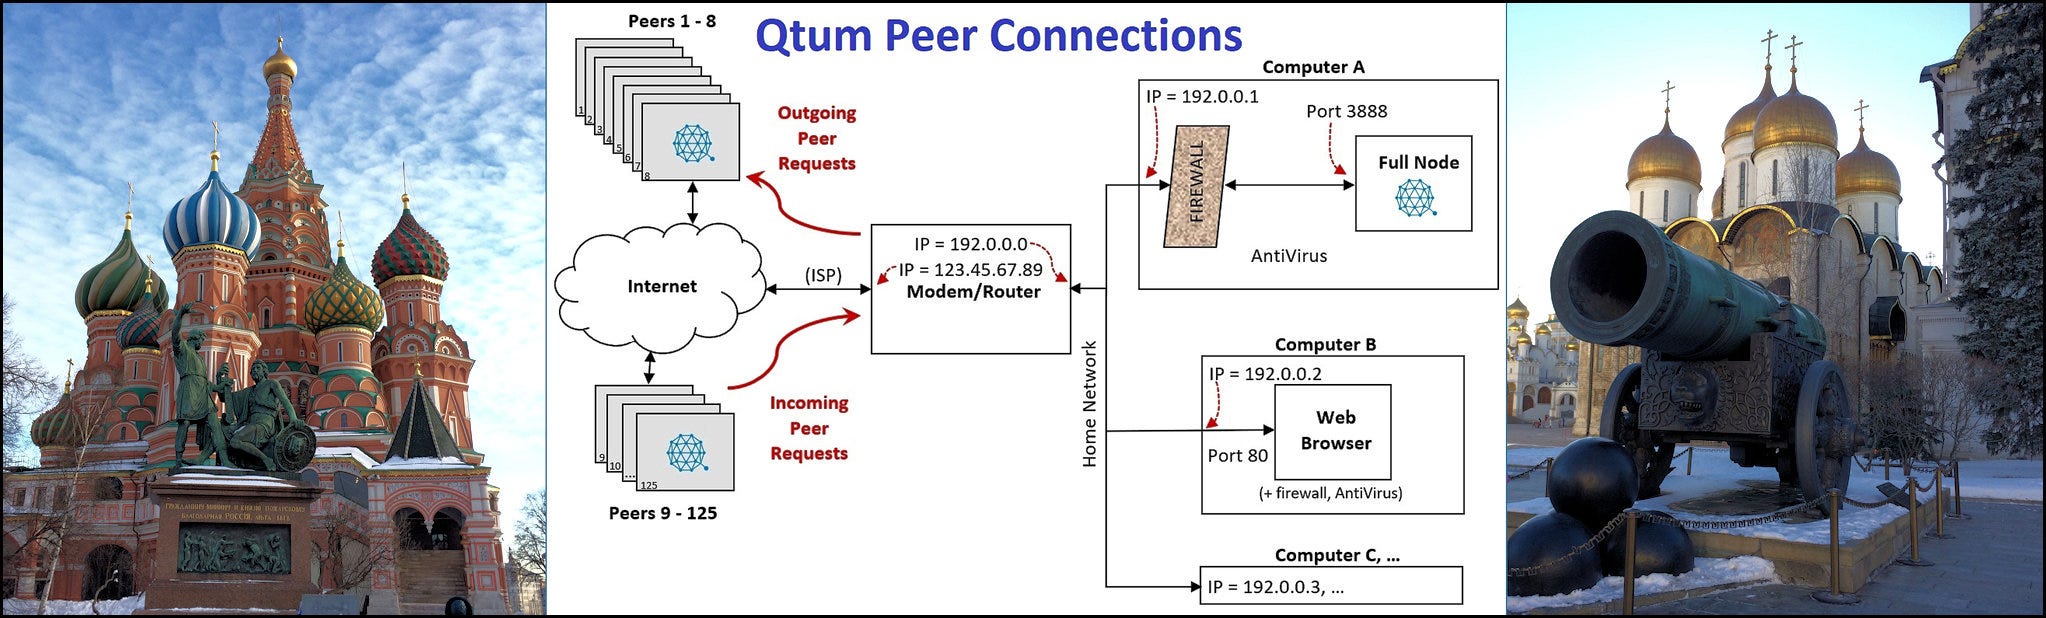 Qtum Peer Connections May 21 2018 Jackson Belove Medium - 